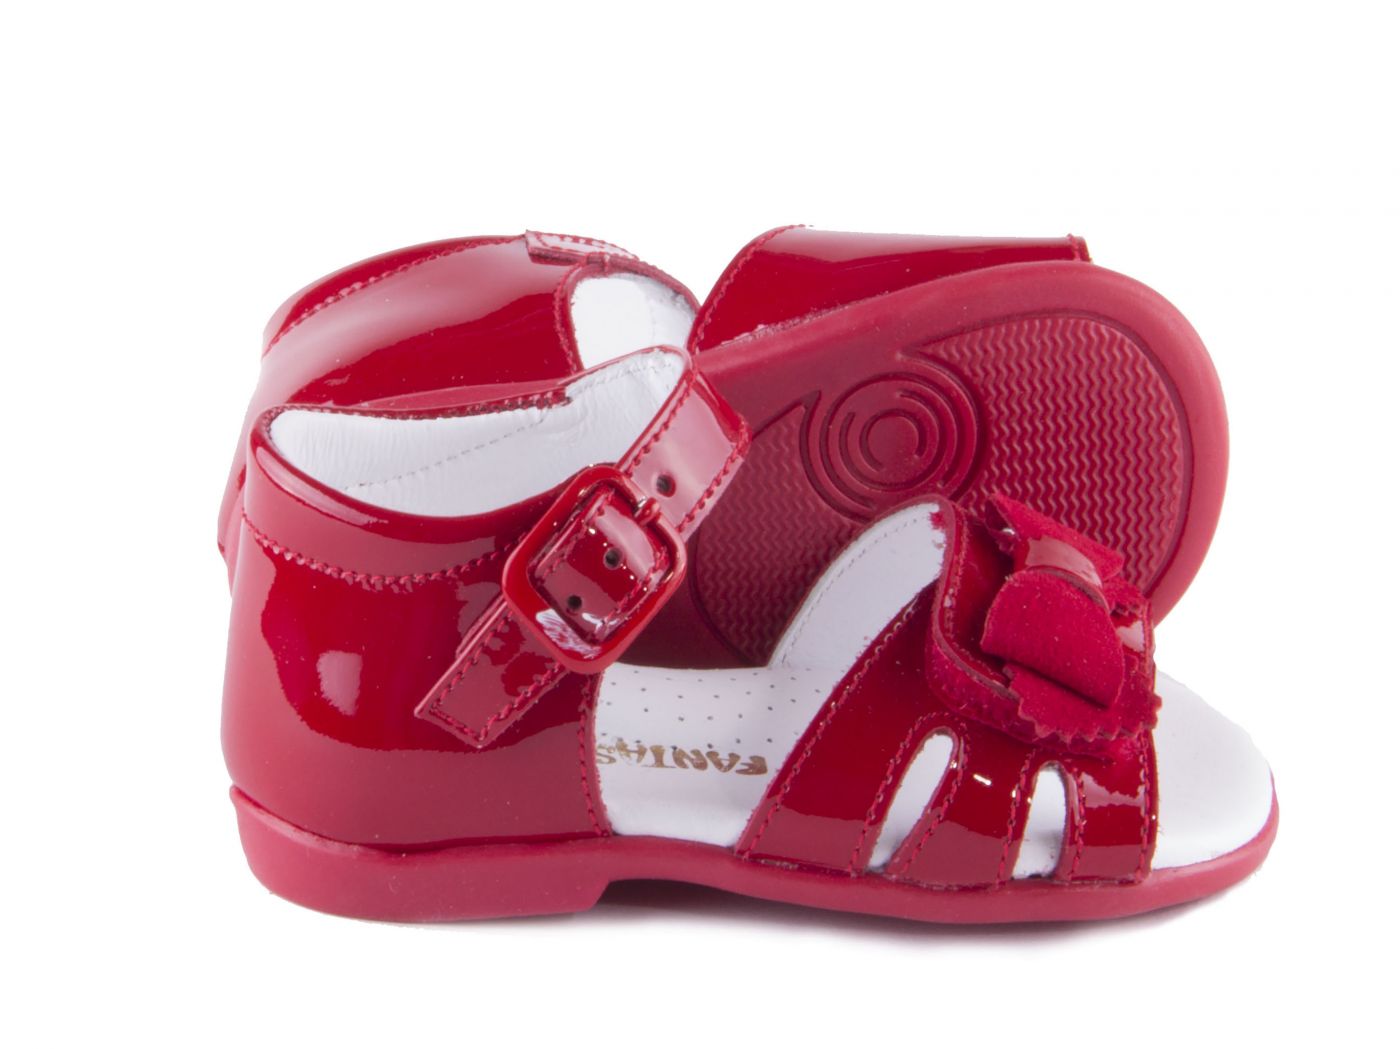 Comprar zapato FANTASIA para PREANDANTE NIÑA estilo SANDALIA color ROJO CHAROL